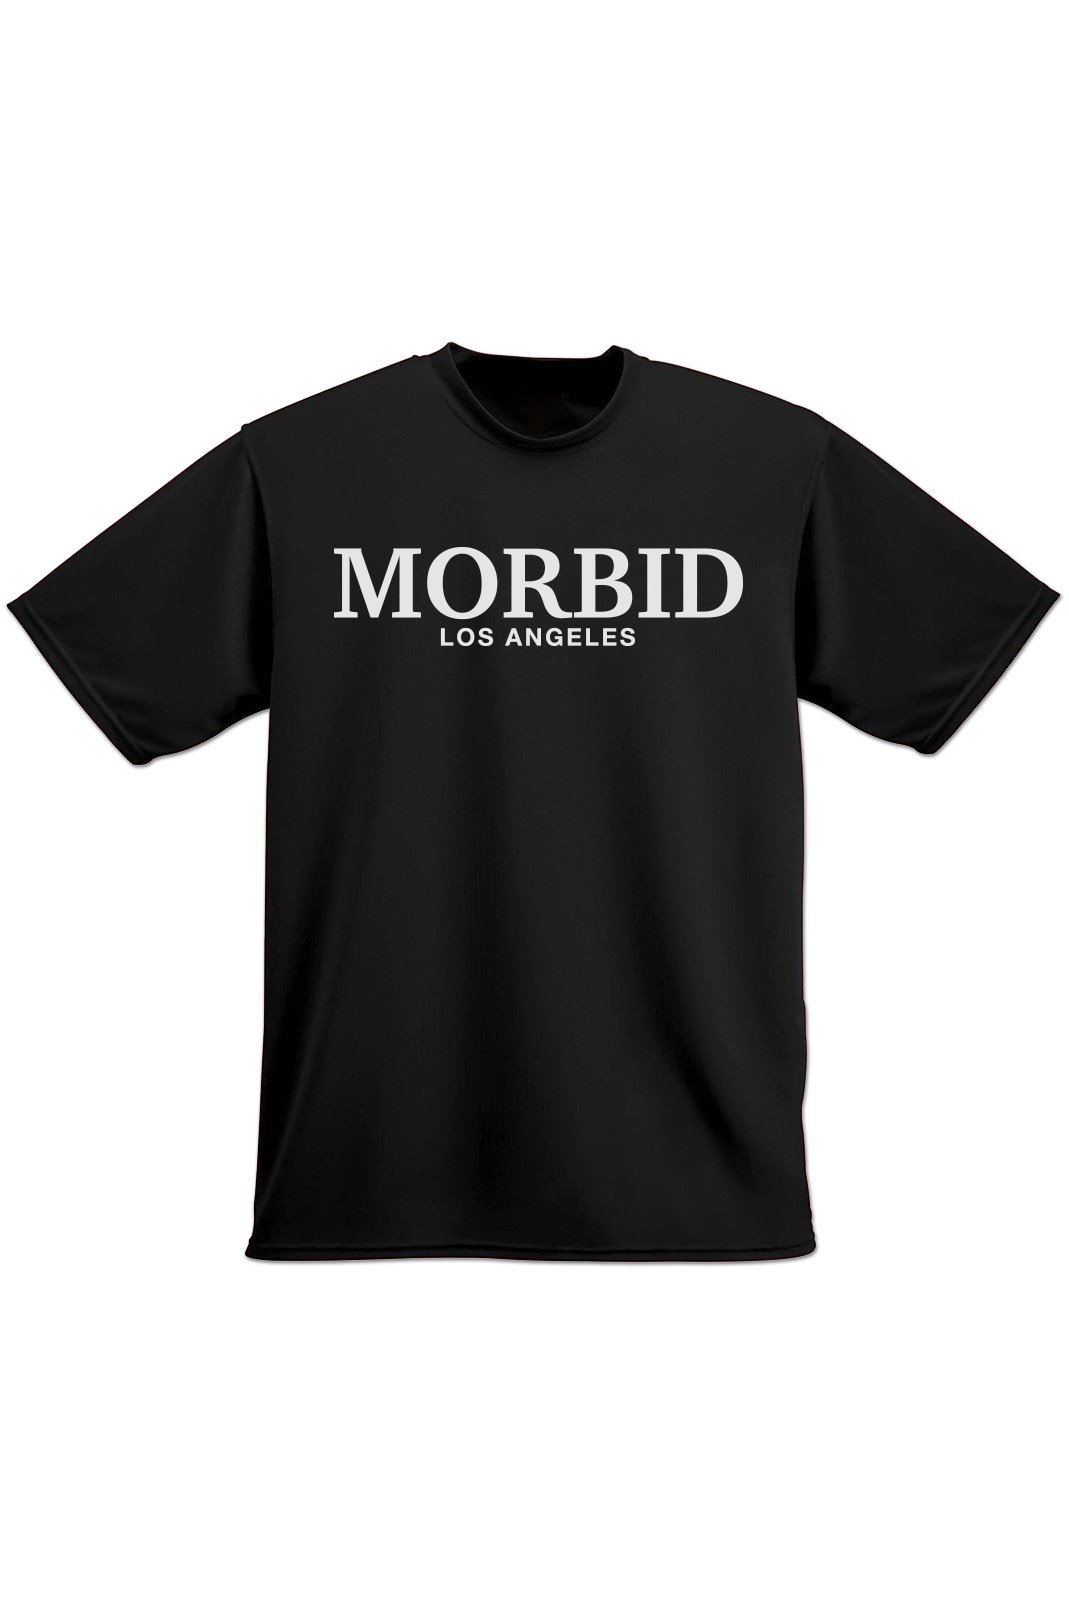 MORBID Los Angeles Clothing Streetwear Fancy Type Black t-shirt